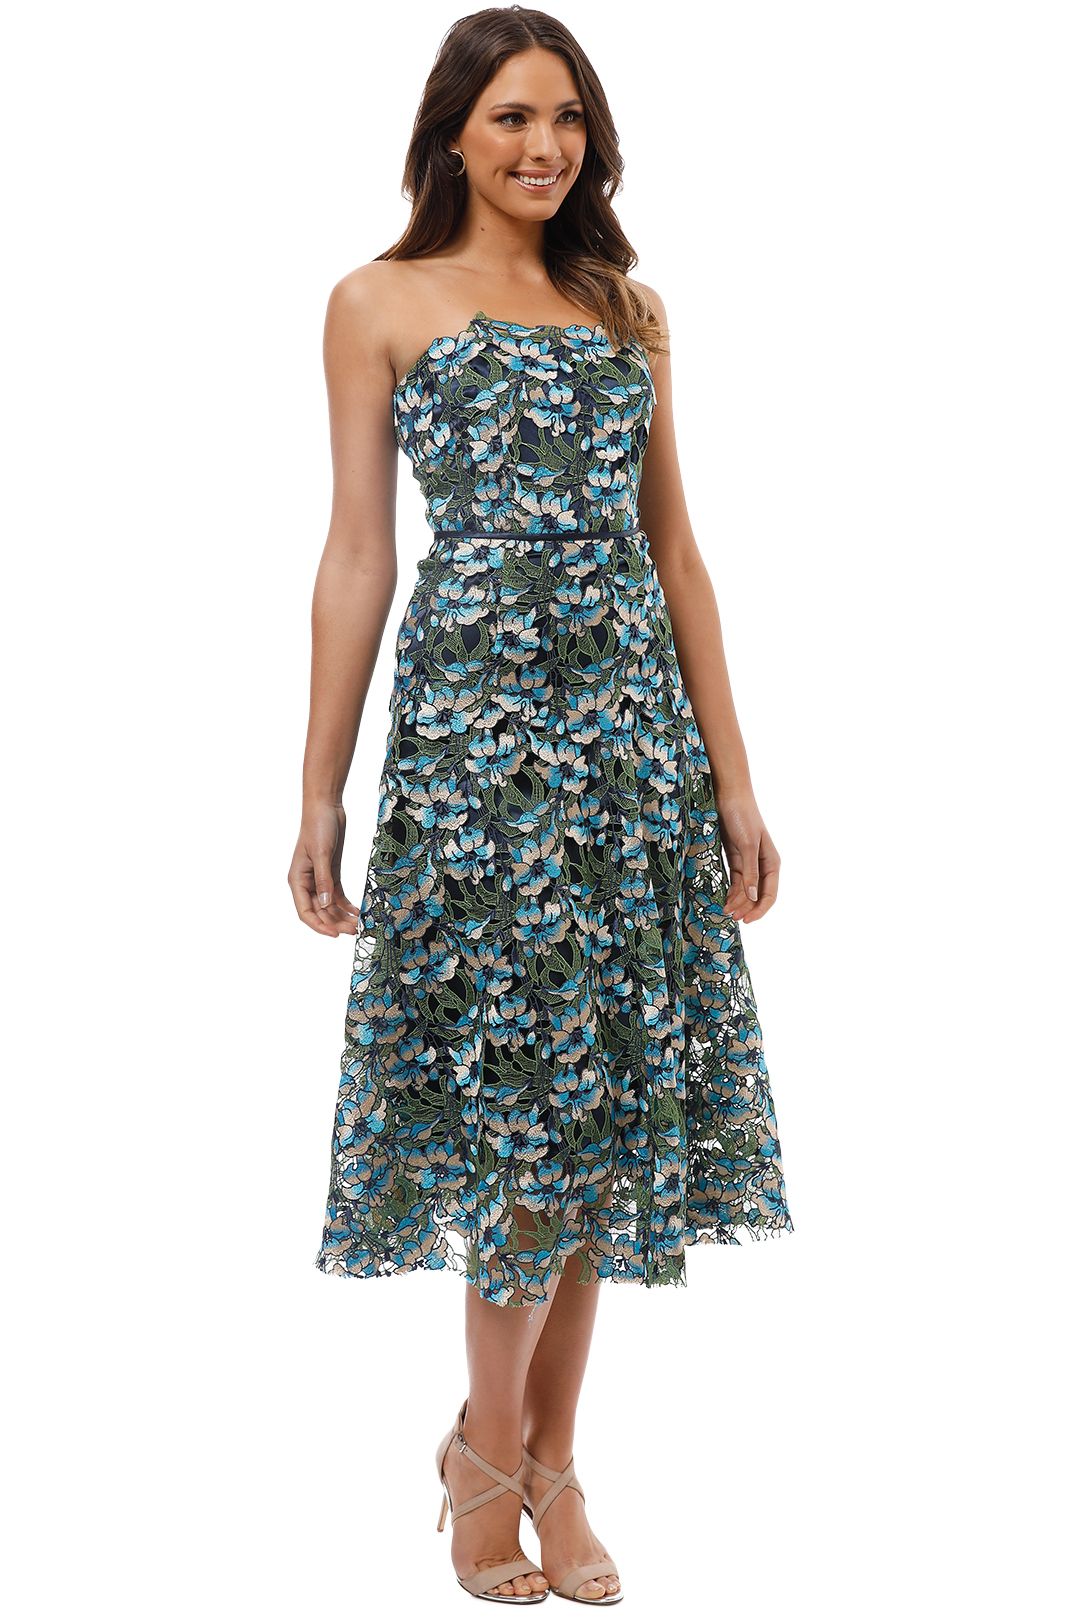 Moss and Spy - Gardenia Strapless Dress - Multi - Side